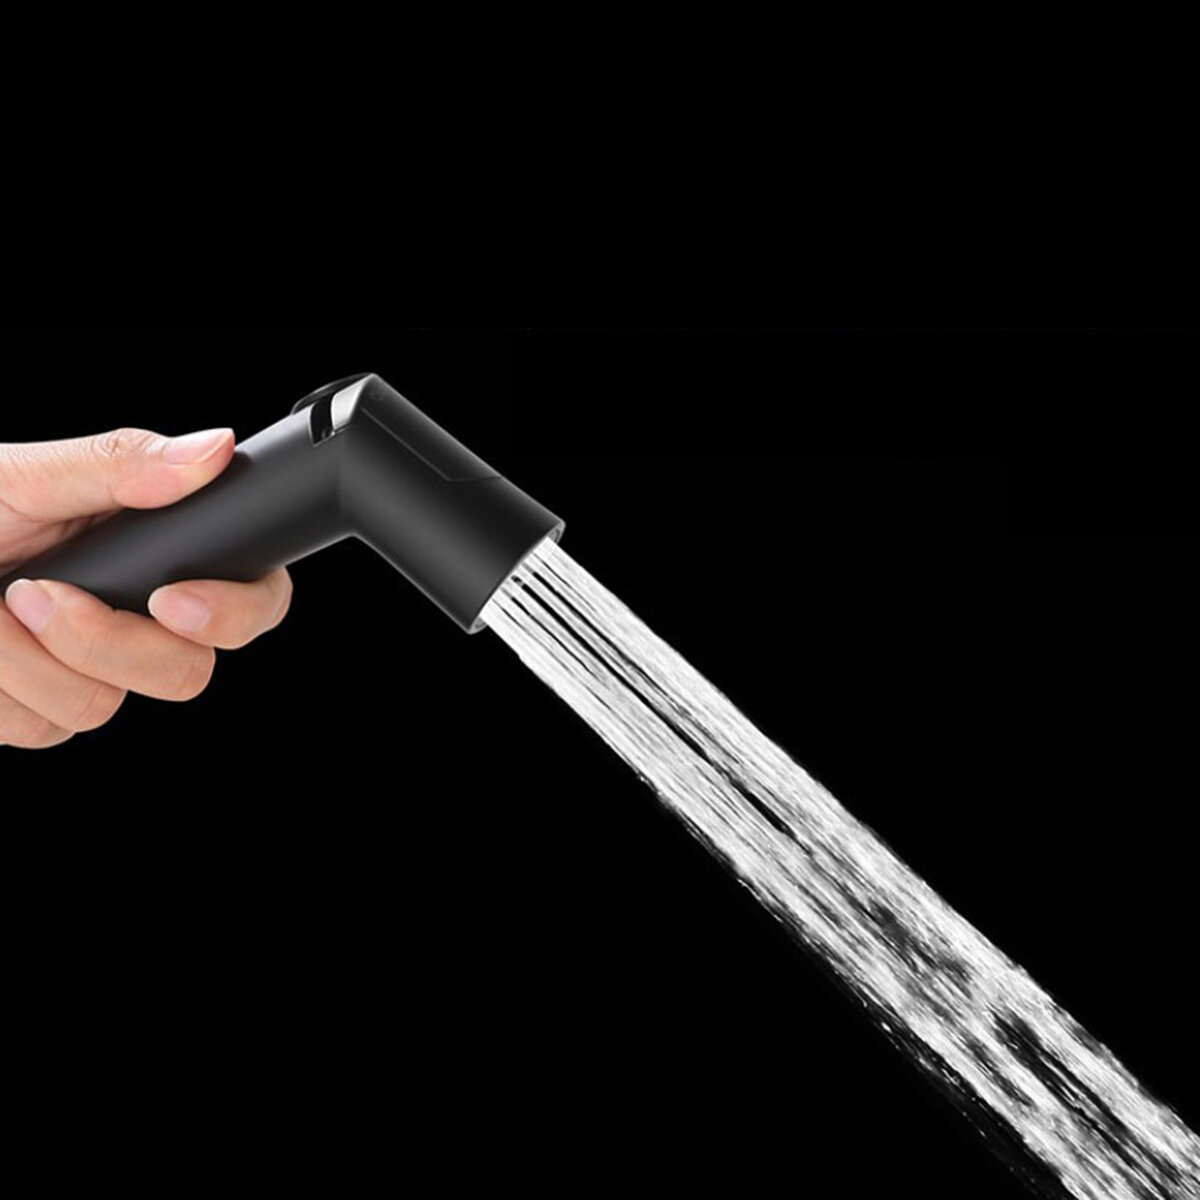 

Hand Held Shower Head Bidet Toilet Spray Jet Kit W/Hose Holder Cleaning Sprayer